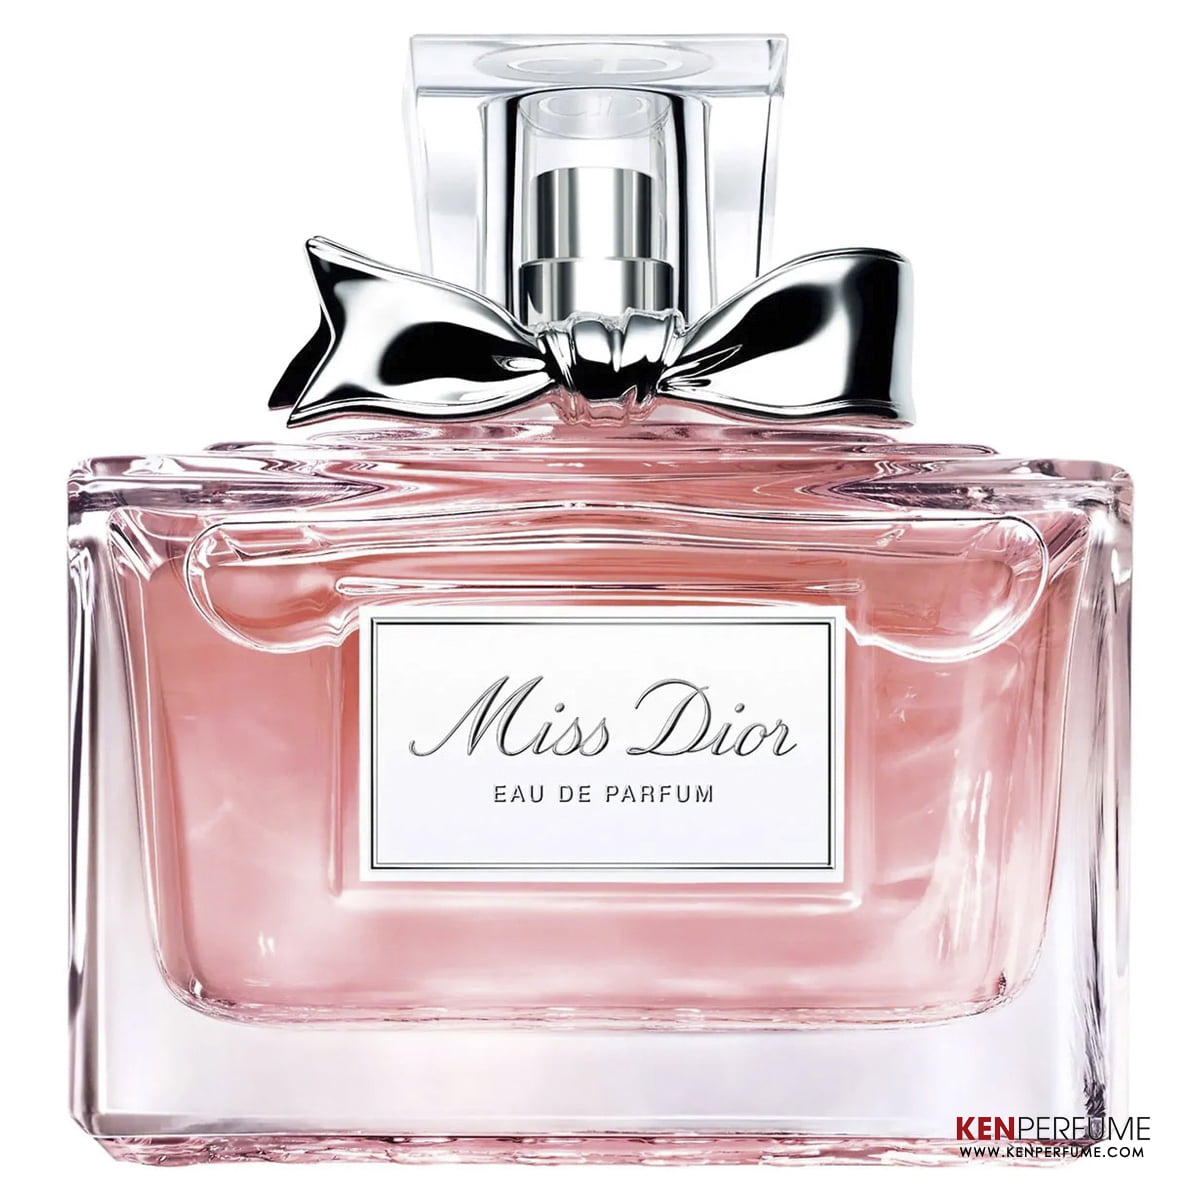 Nước hoa nữ Miss Dior Blooming Bouquet của hãng CHRISTIAN DIOR